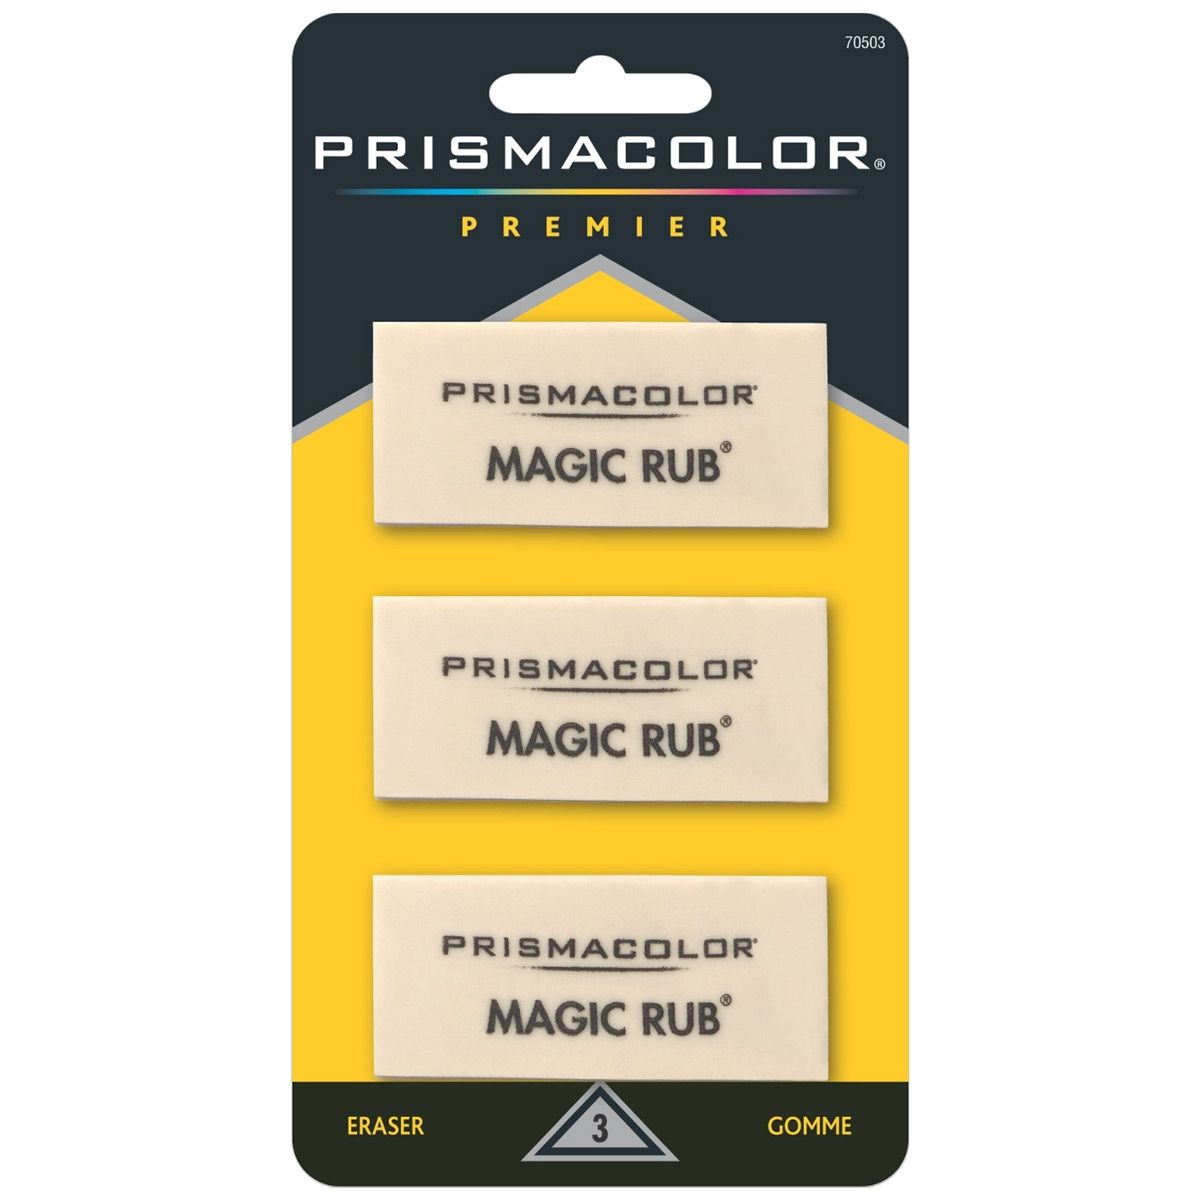 Prismacolor Magic Rub Eraser, Pack of 3